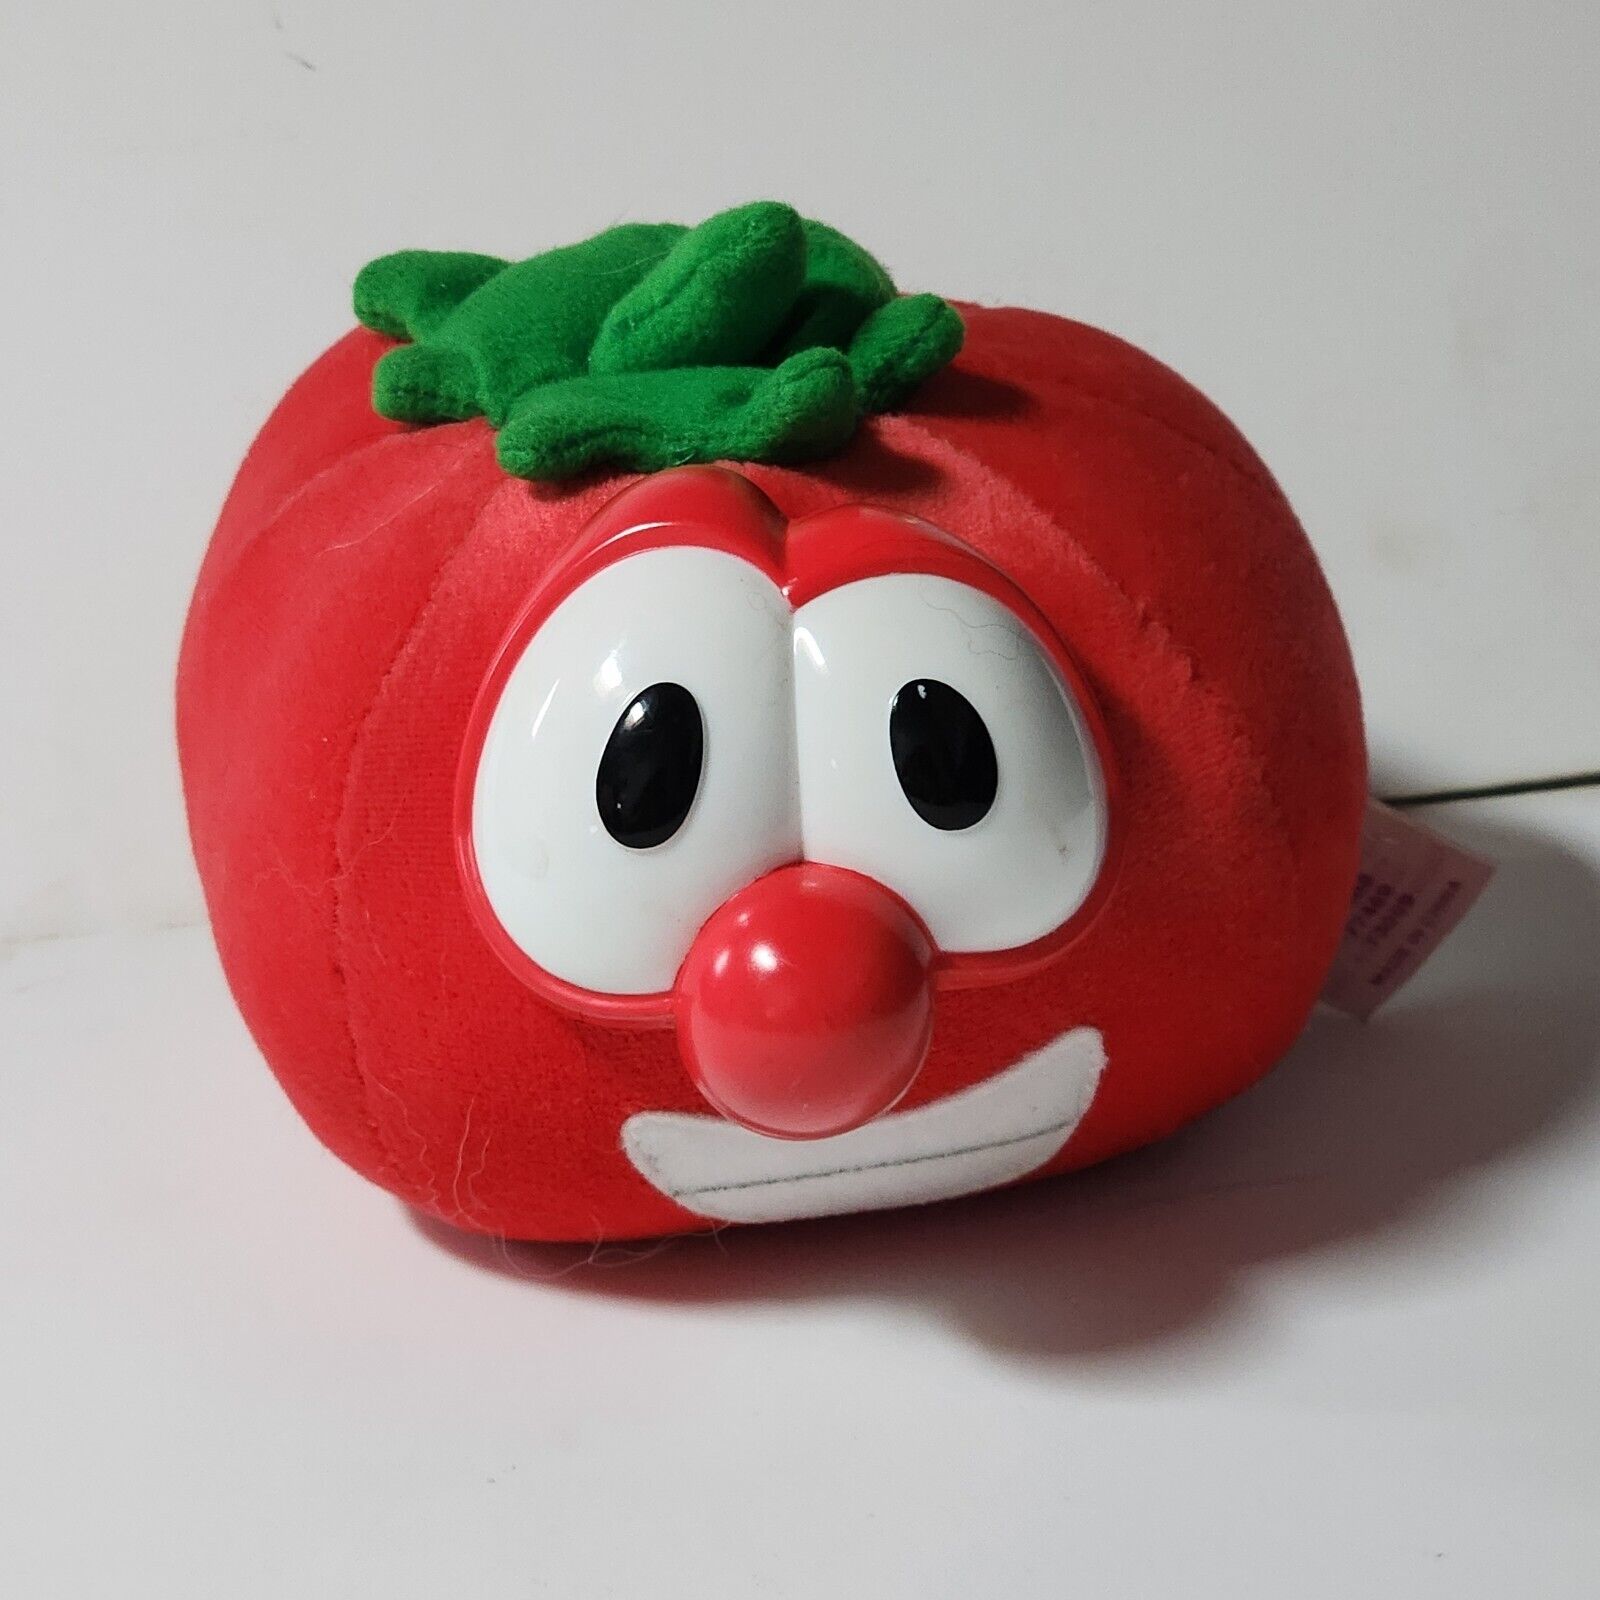 Vintage Fisher Price Veggie Tales Red Bob the Tomato Stuffed Plush No Sound 1999